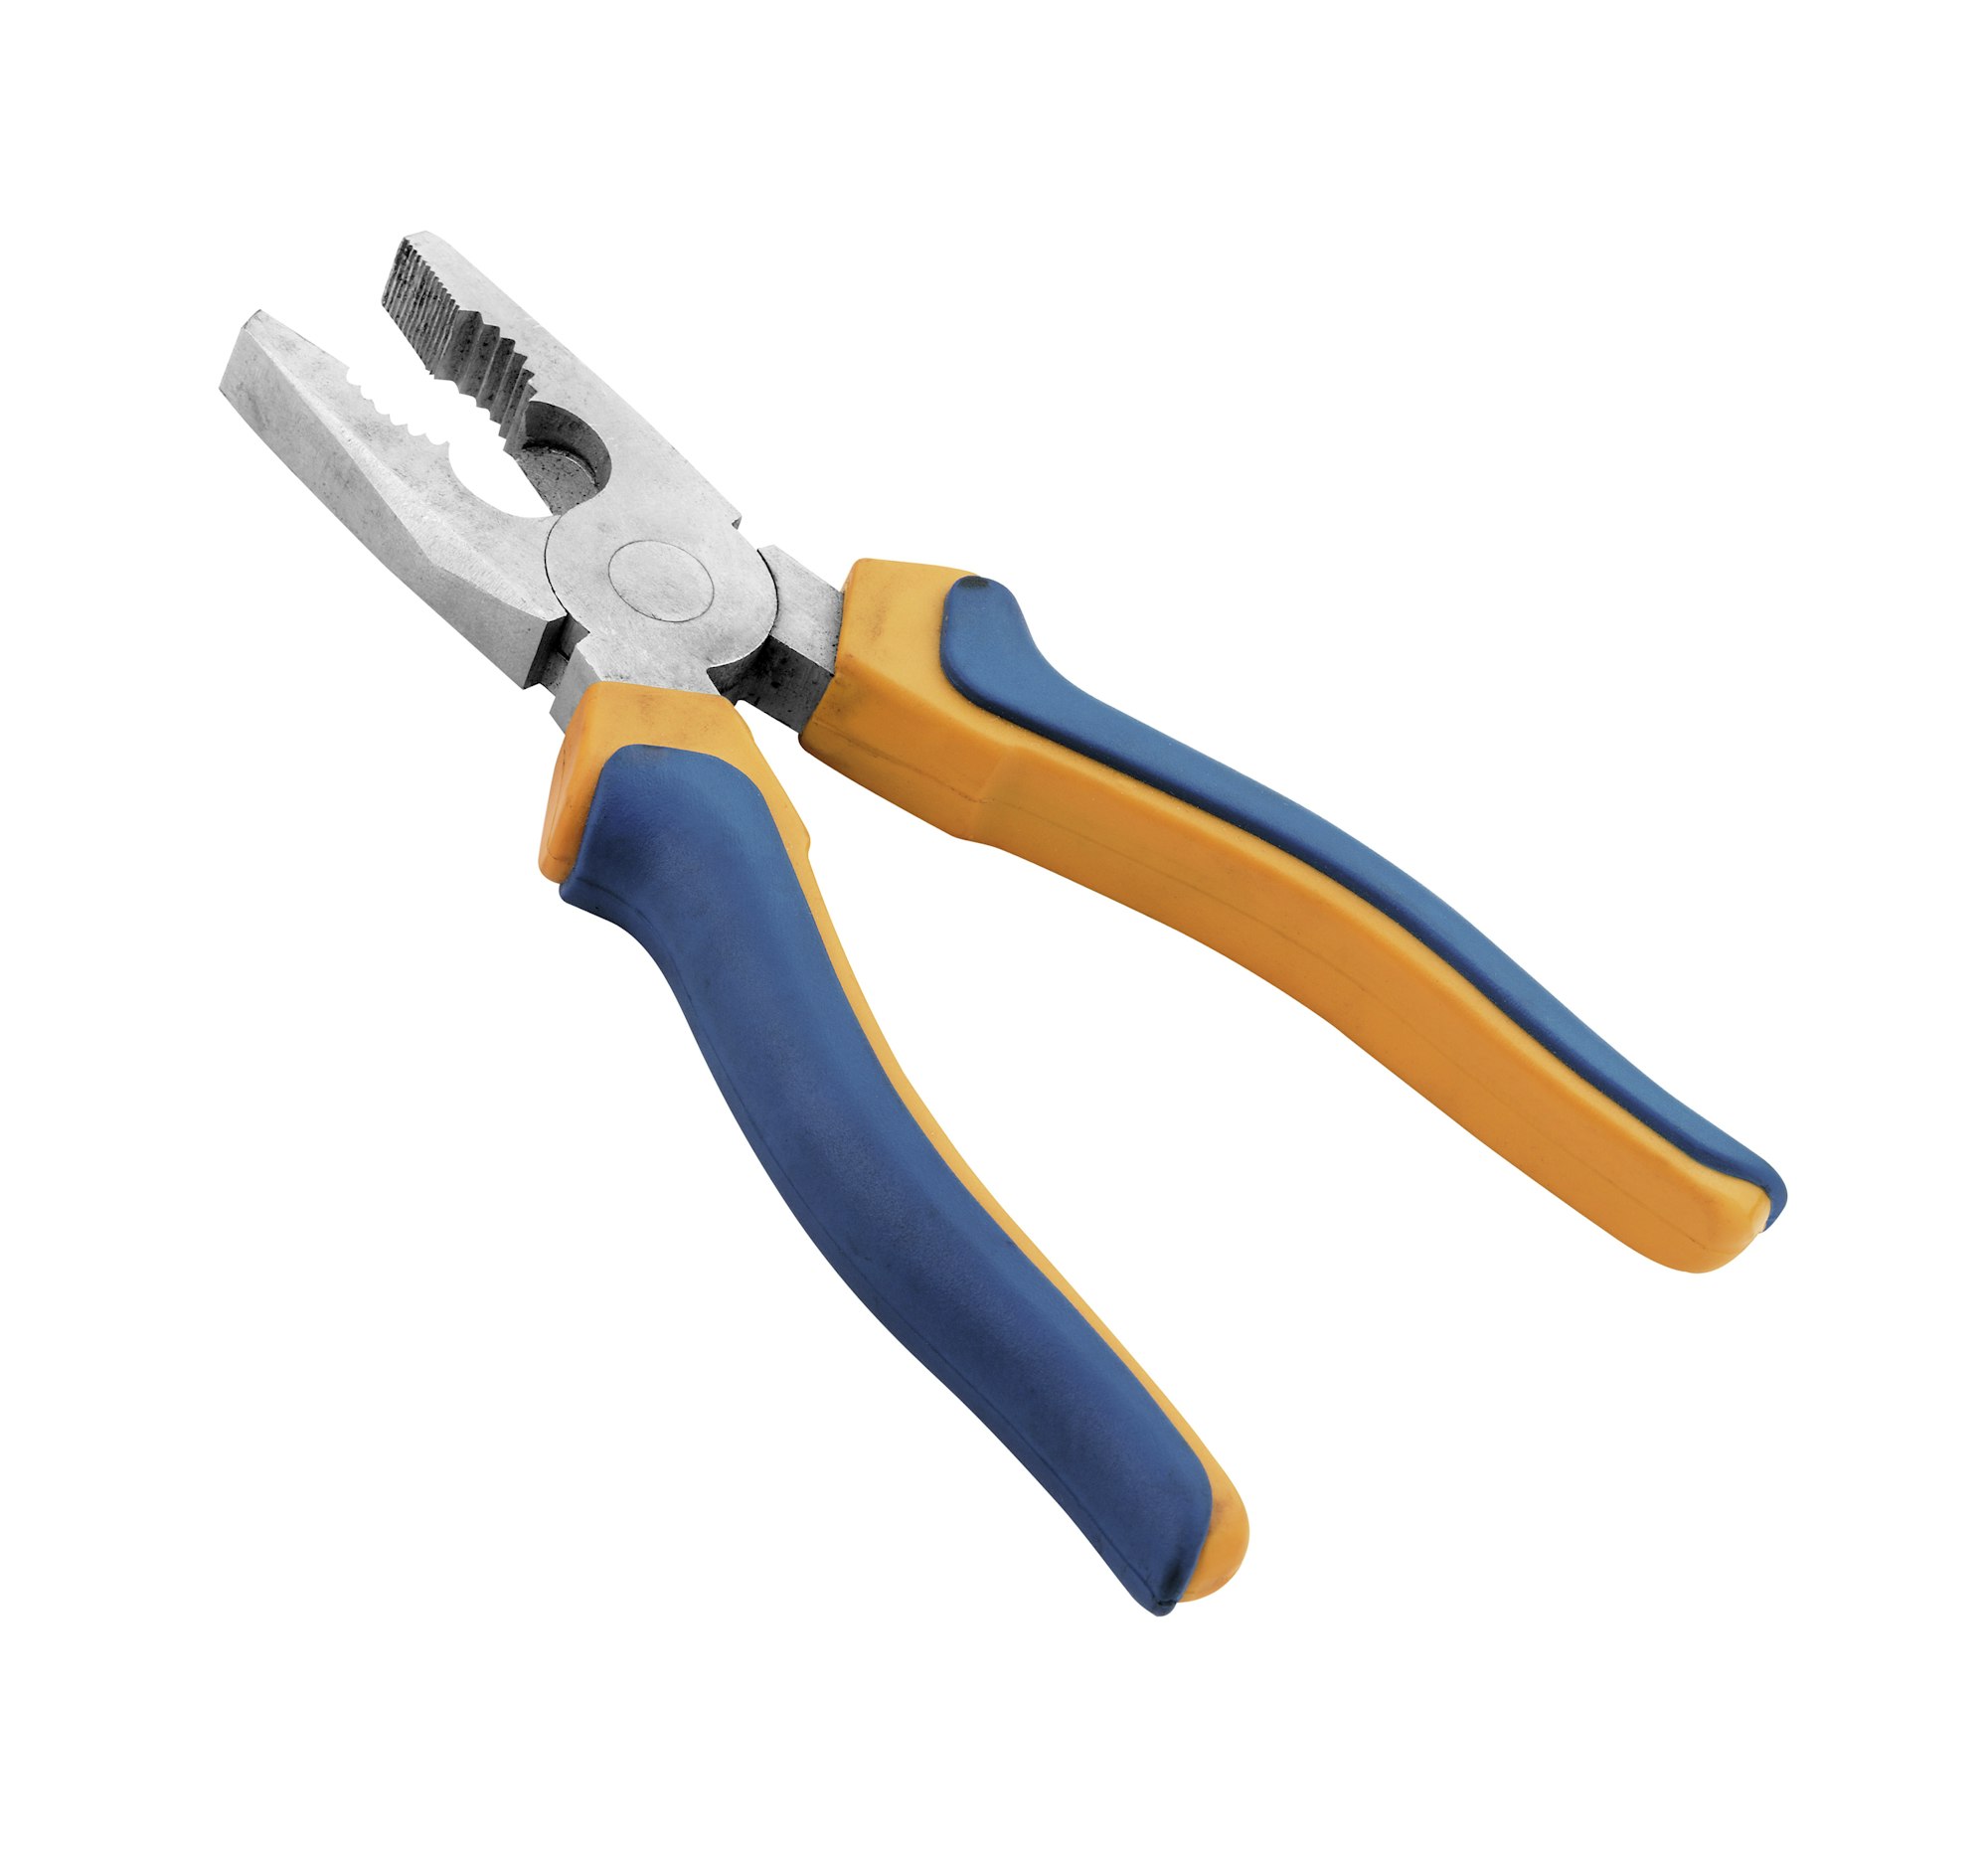 Pliers hand tool